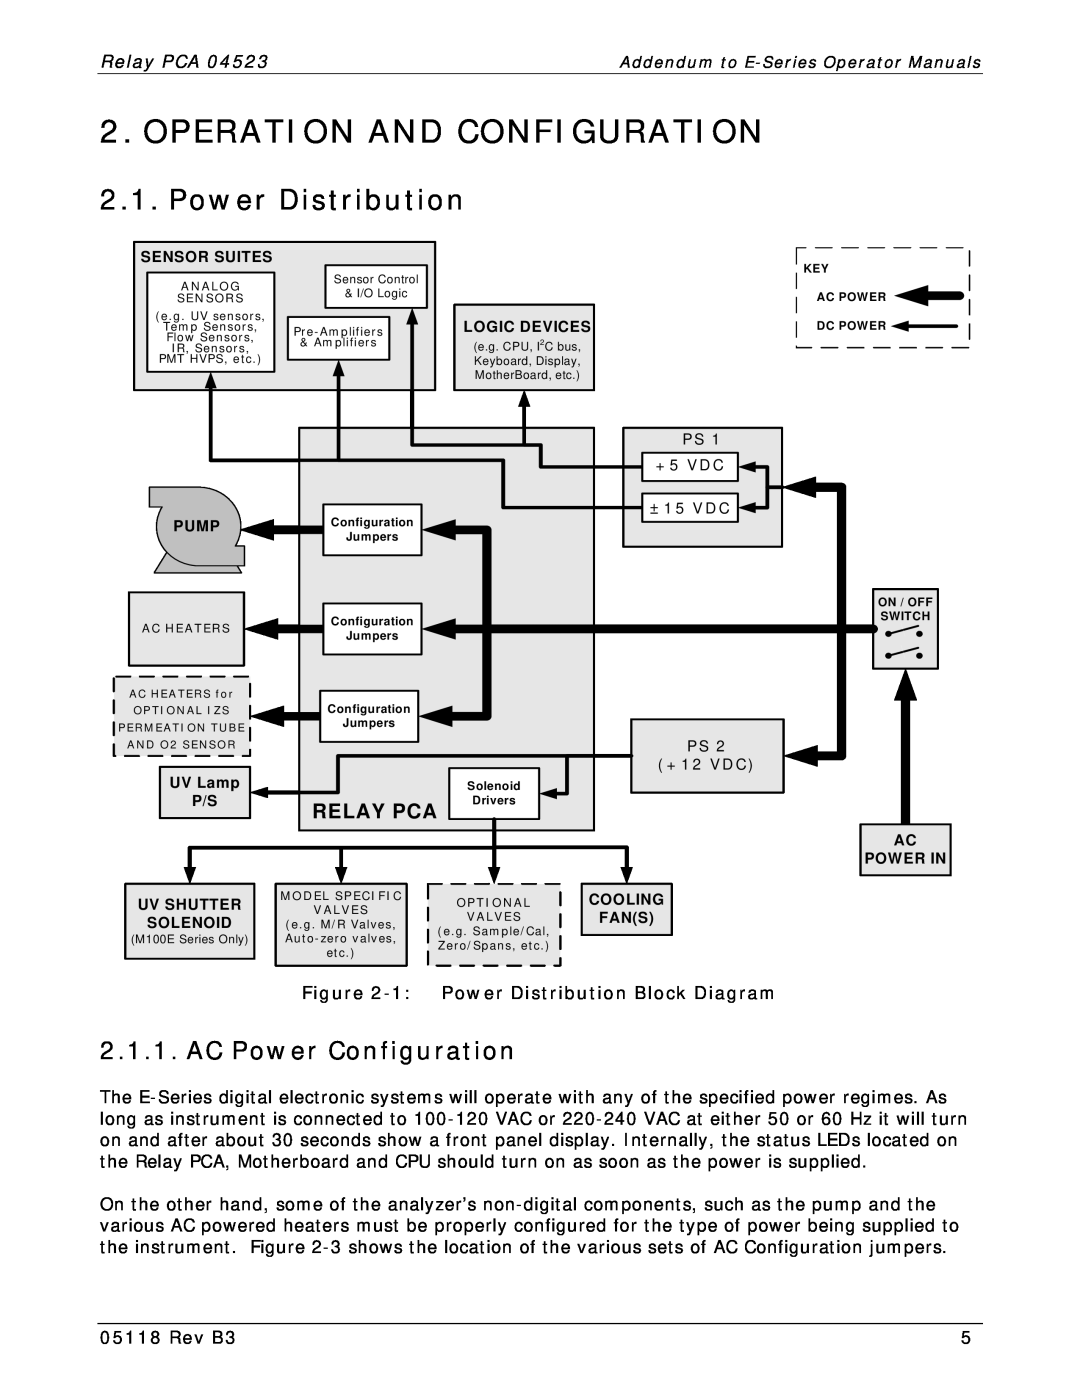 Teledyne M100E manual Operation And Configuration, Power Distribution, AC Power Configuration, Relay Pca, Relay PCA, Rev B3 